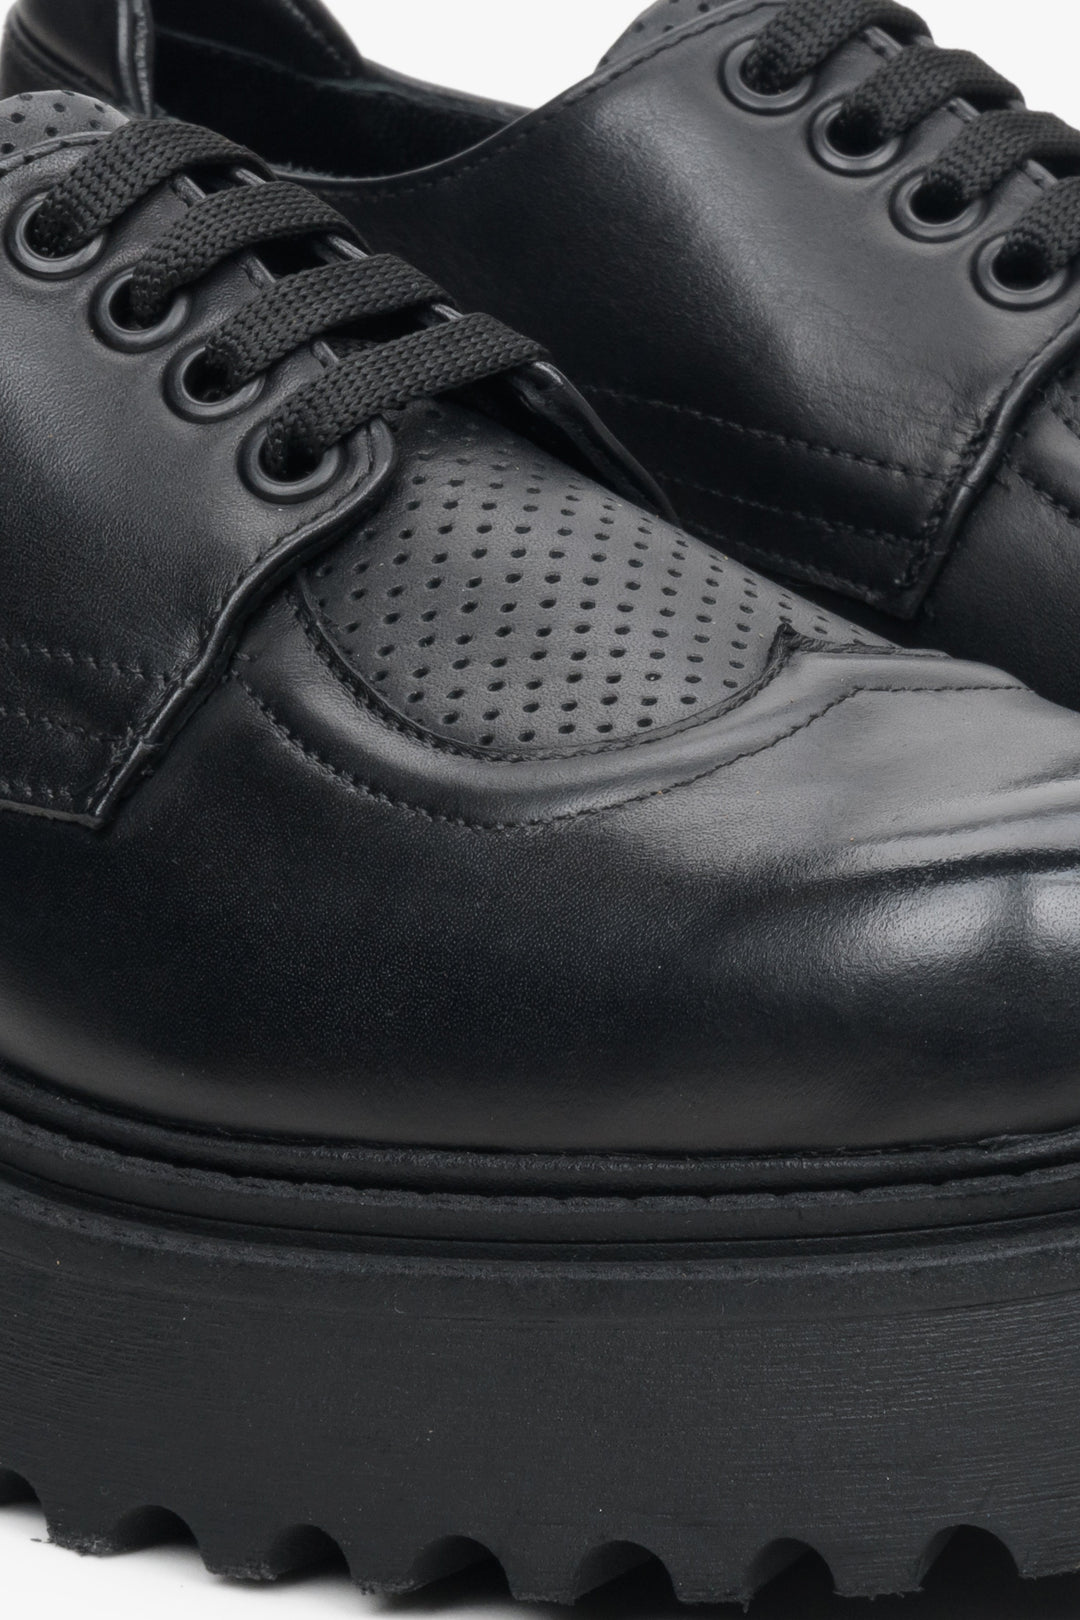 Women's black lace-up leather shoes by Estro - close-up on details.